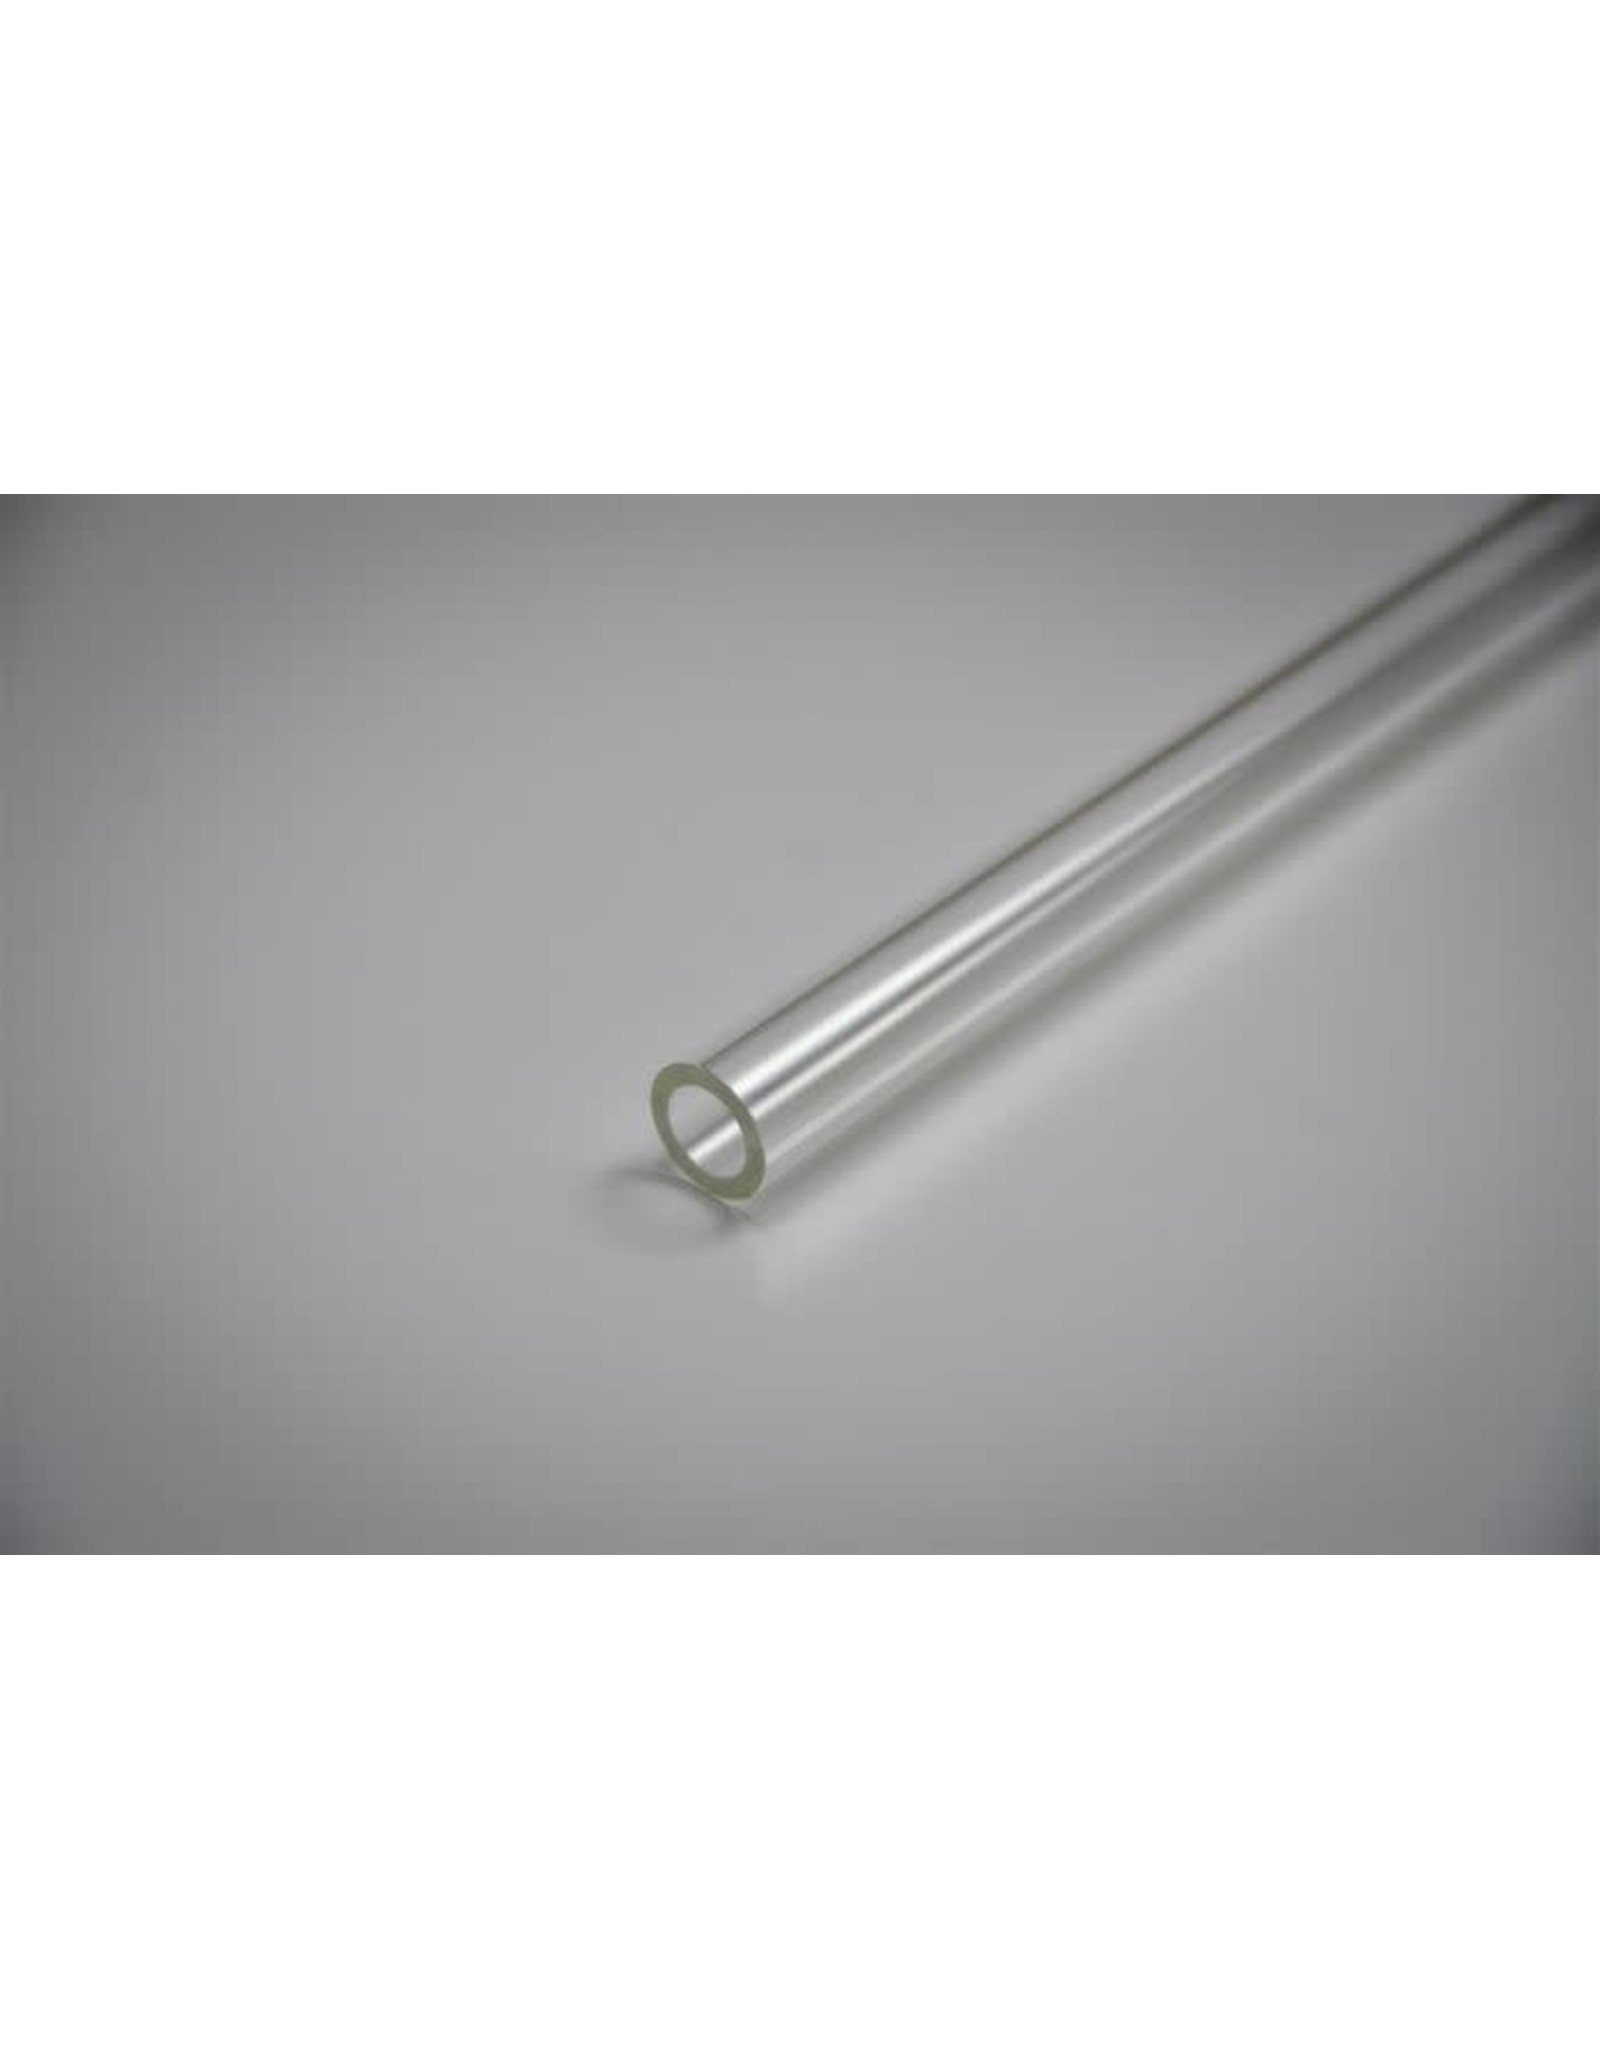 Blichmann Level Gauge Glass Tube G1 20gal